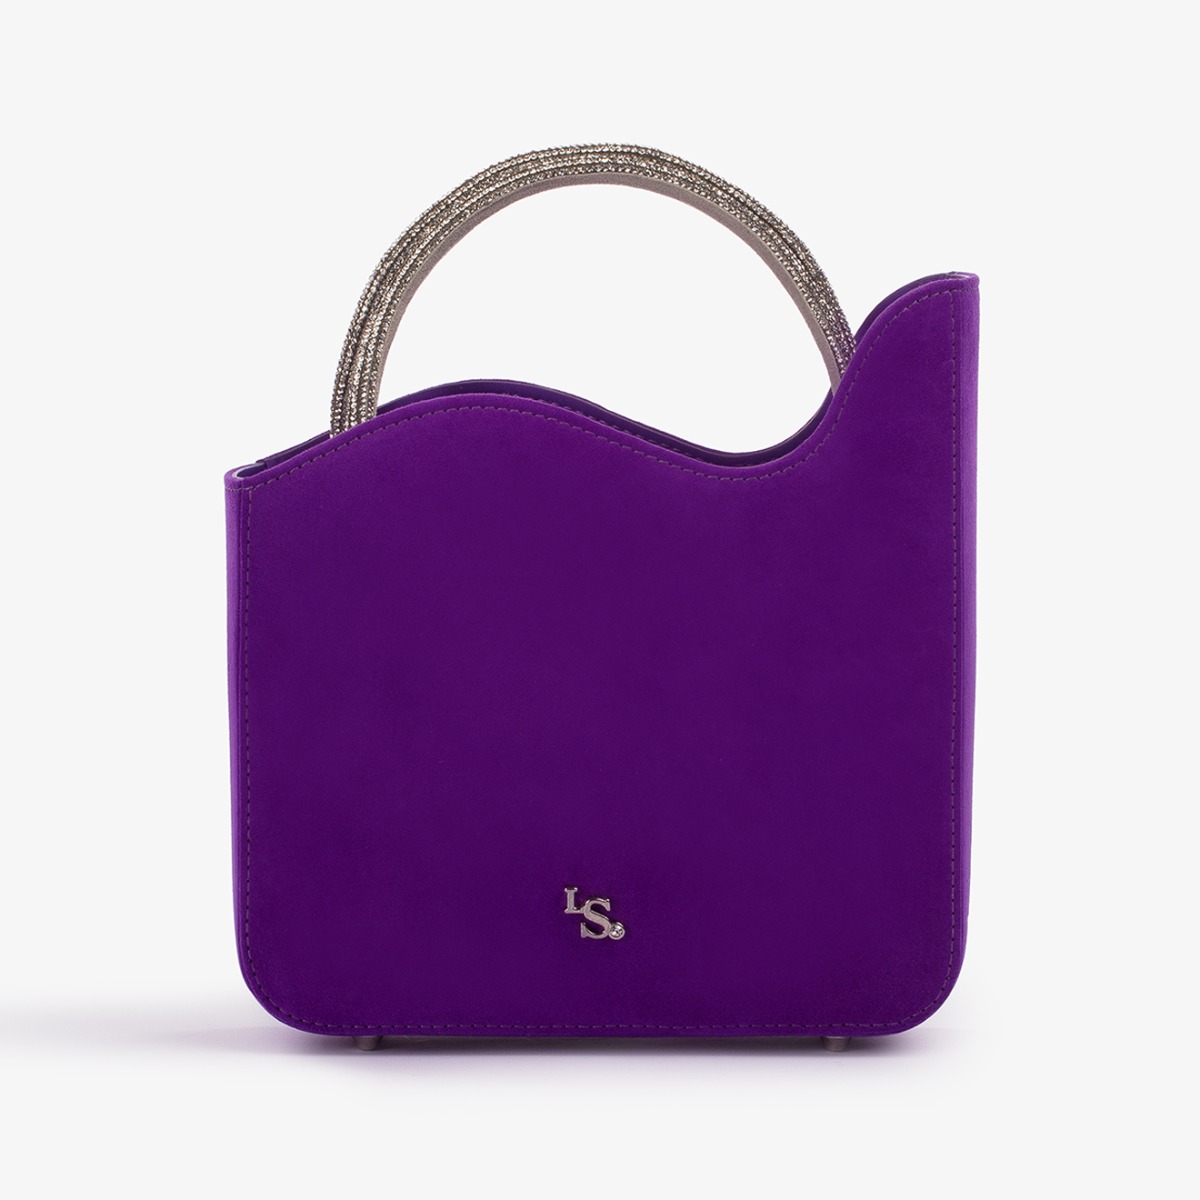 Queen purple suede small bag with Crystals - Le Silla